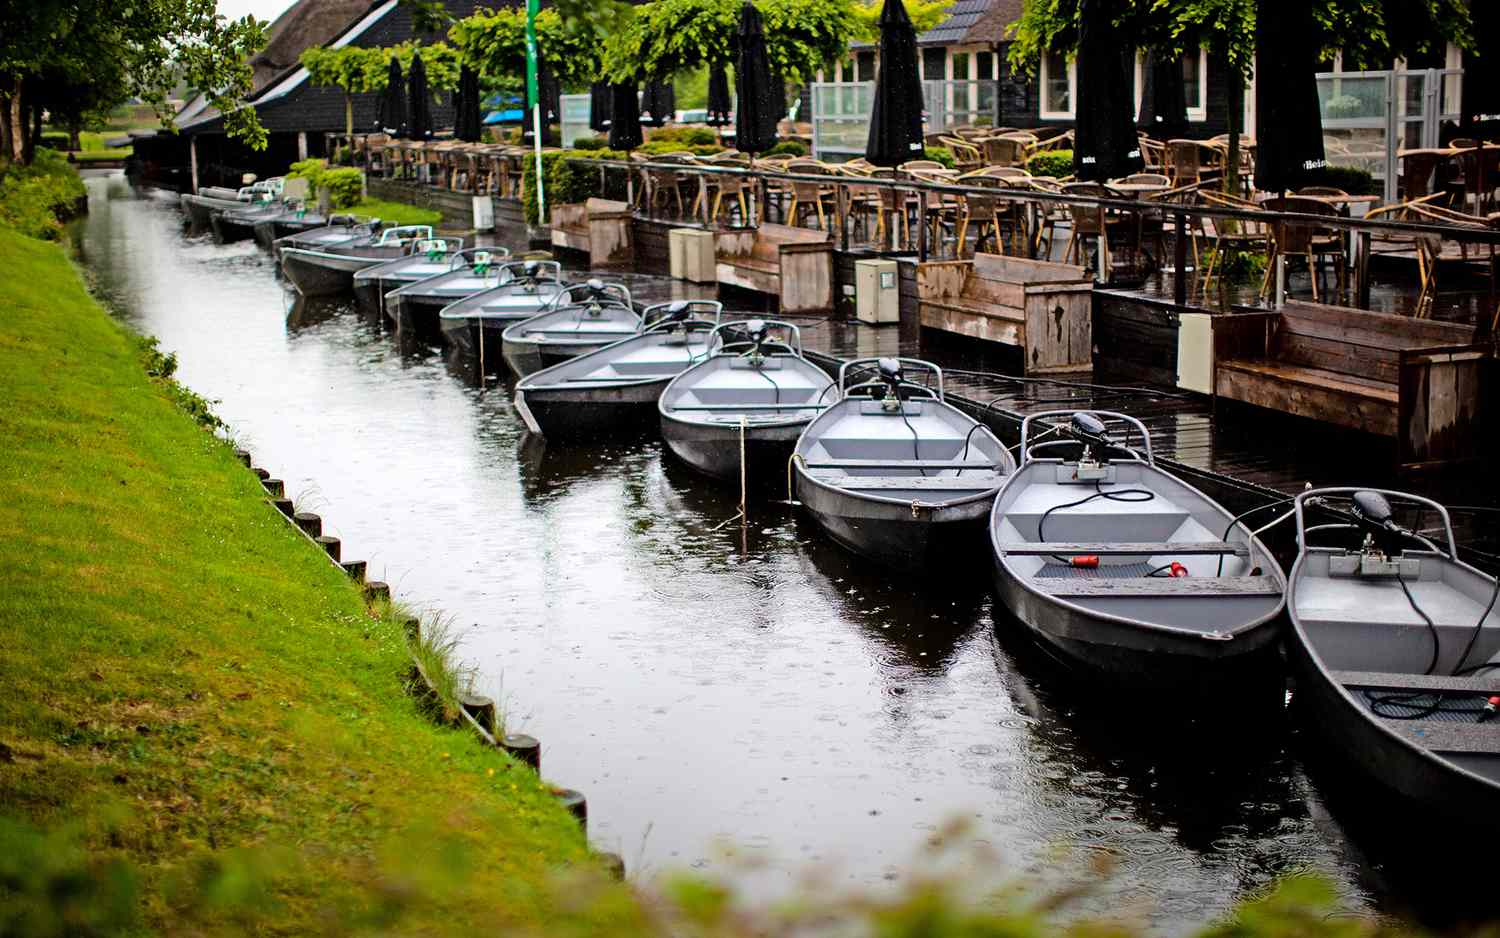 Europe's Most Beautiful Villages: Giethoorn, Netherlands